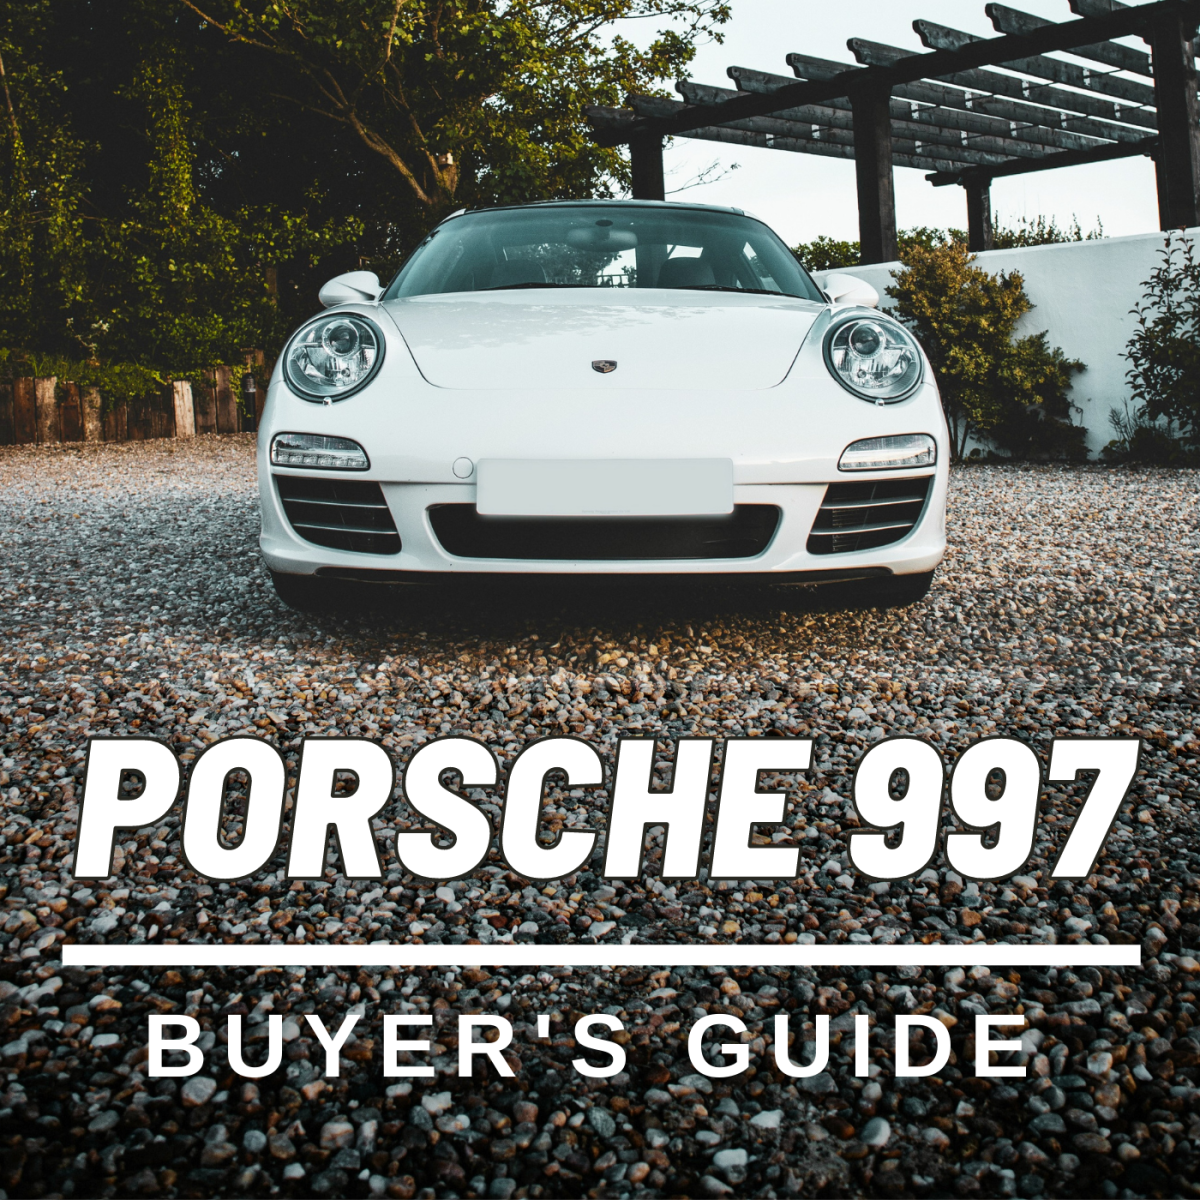 Porsche 997 Buyer's Guide